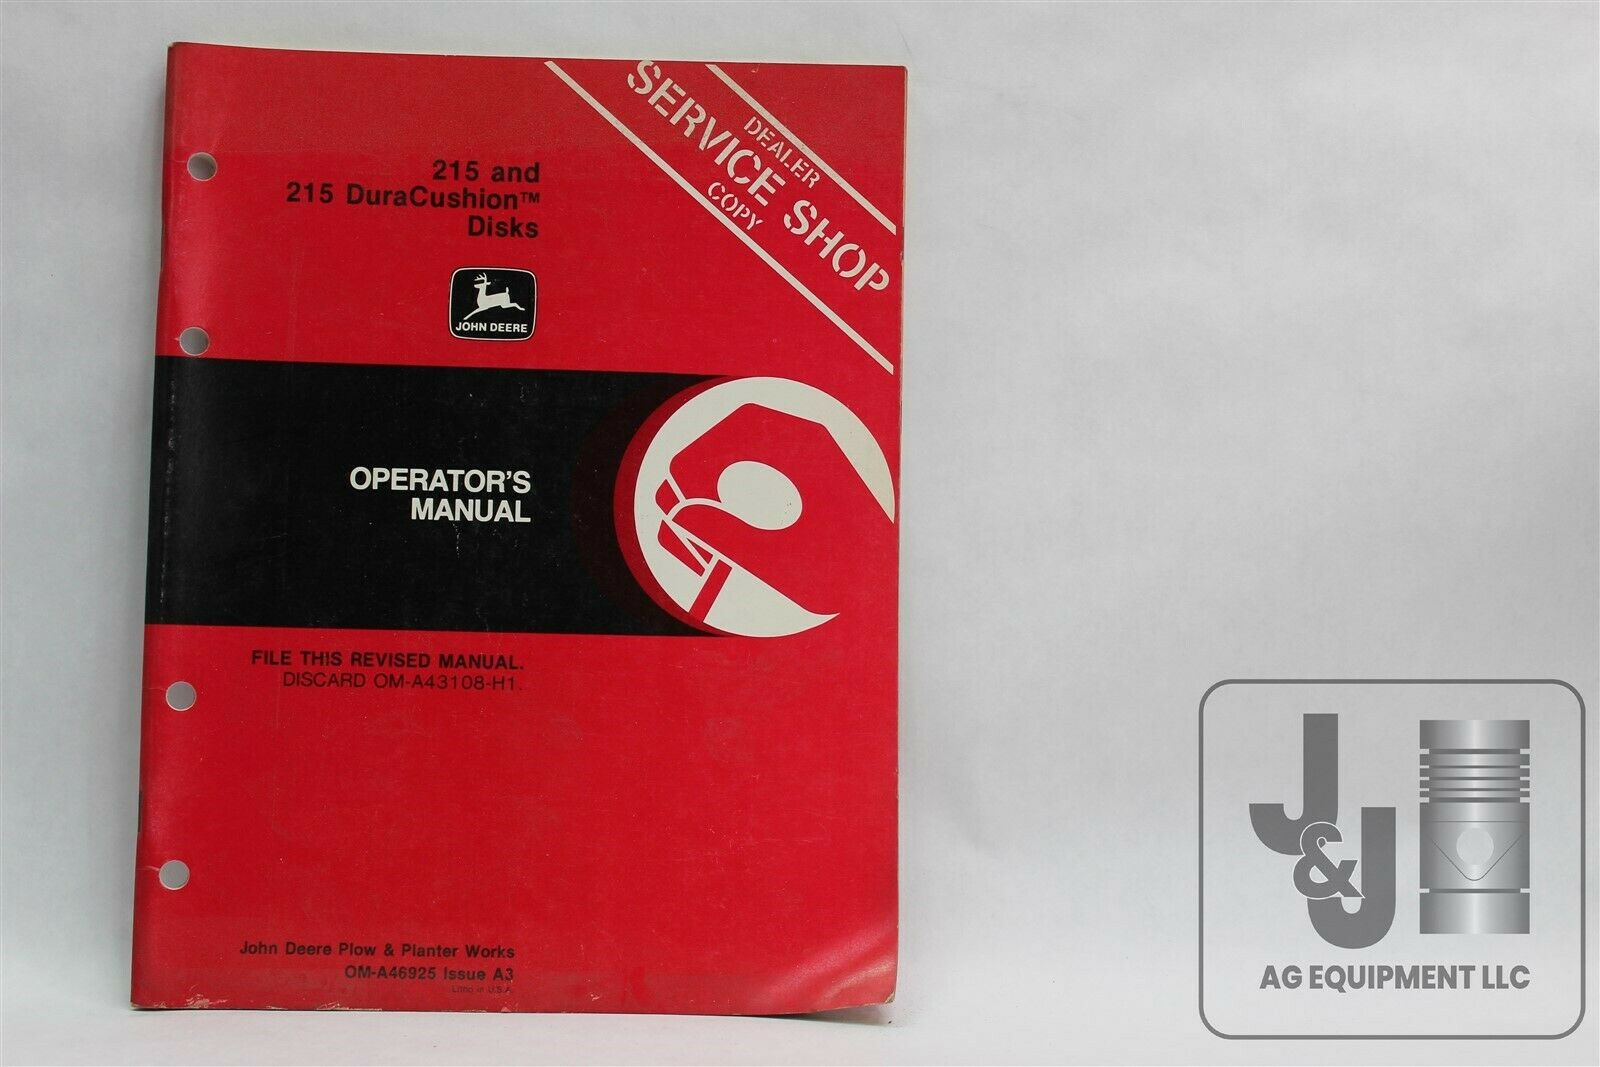 JOHN DEERE 215 & 215 DuraCushion Disks OPERATOR'S MANUAL DEALER COPY OM-A46925